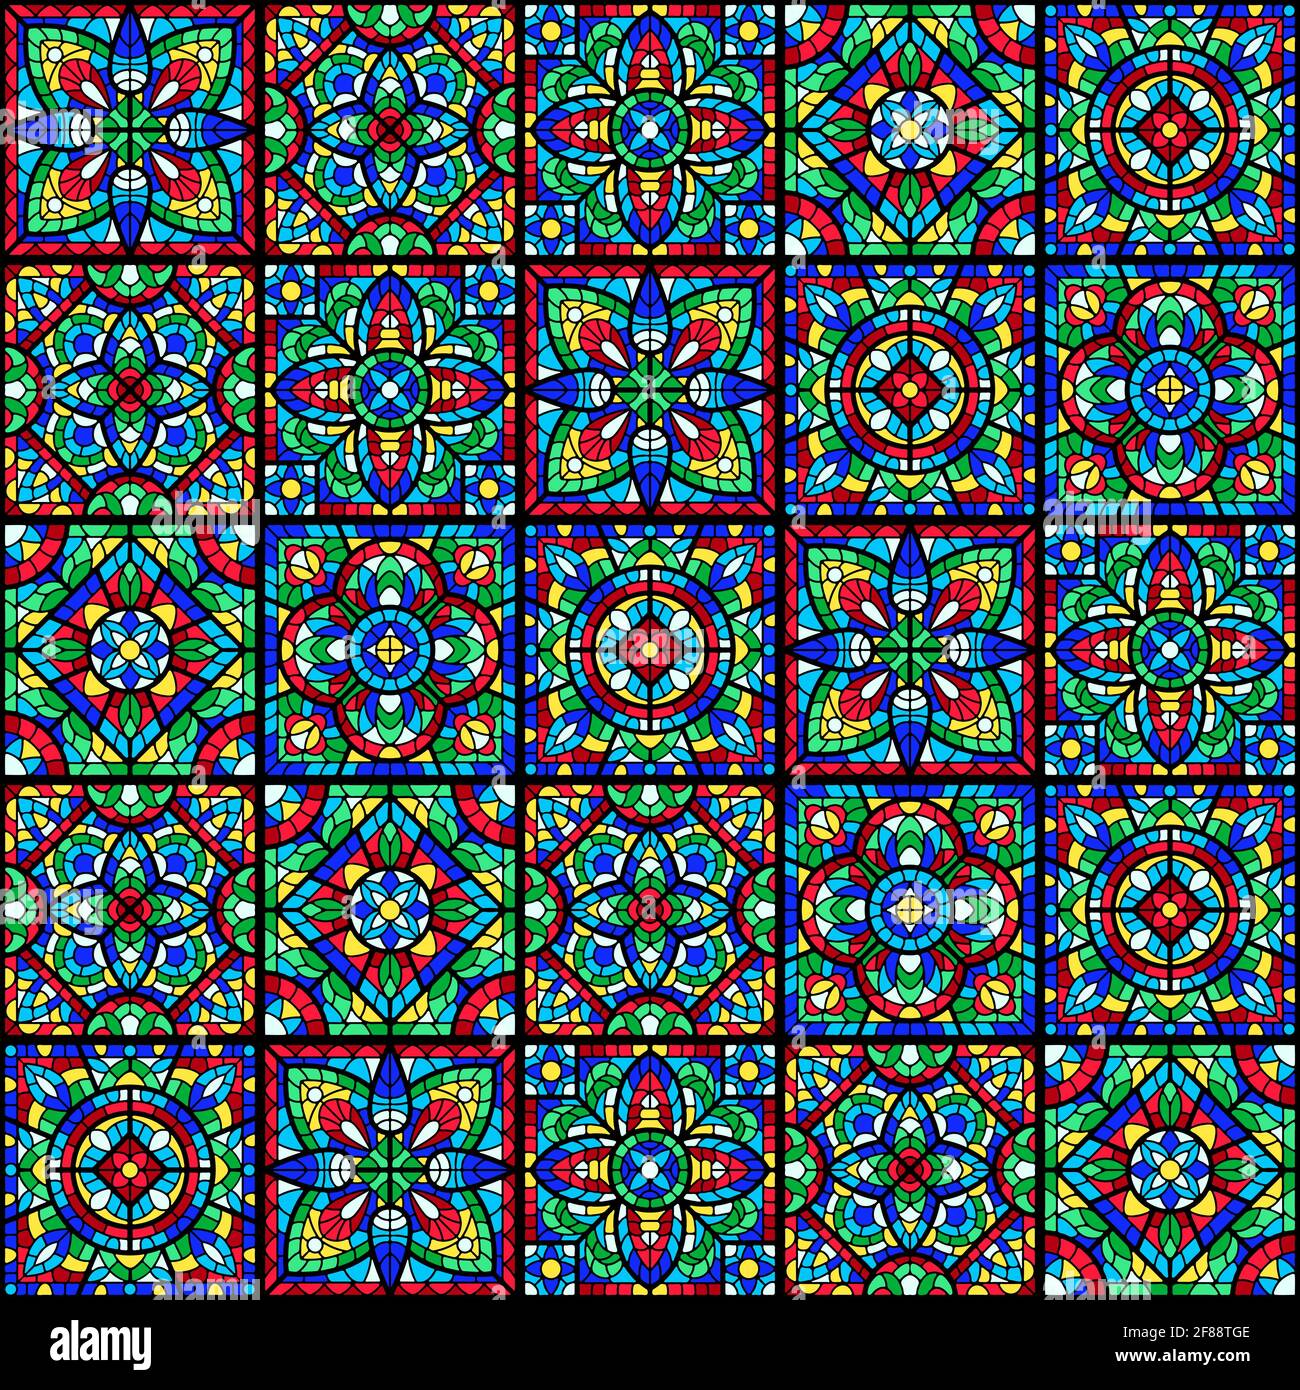 Buntglasfenster mit farbigem Stück. Dekoratives Mosaik-Fliesenmuster. Stock Vektor